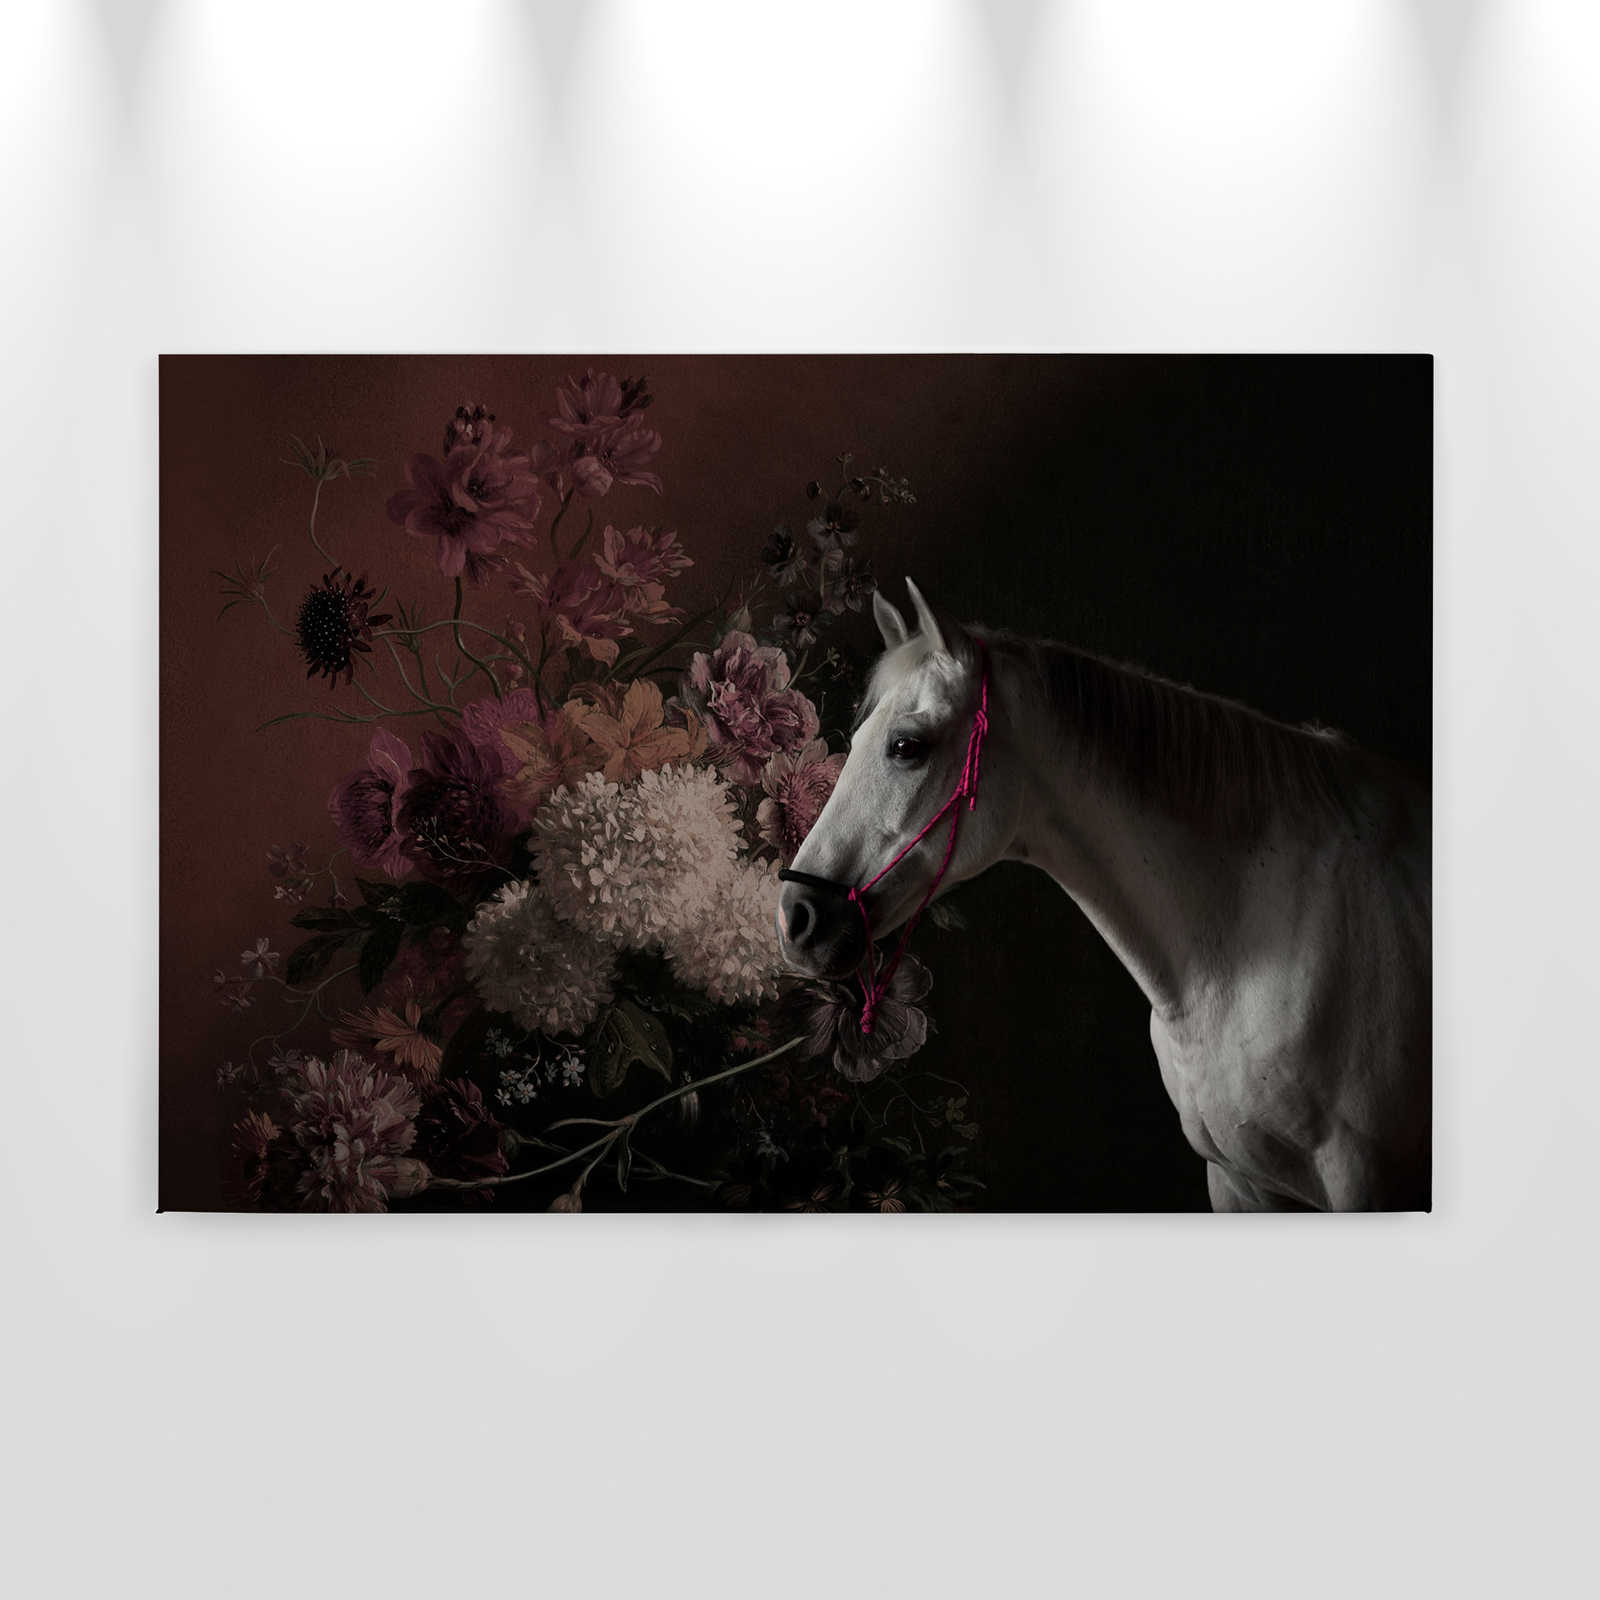             Canvas painting Horses Portrait with Flowers - 0,90 m x 0,60 m
        